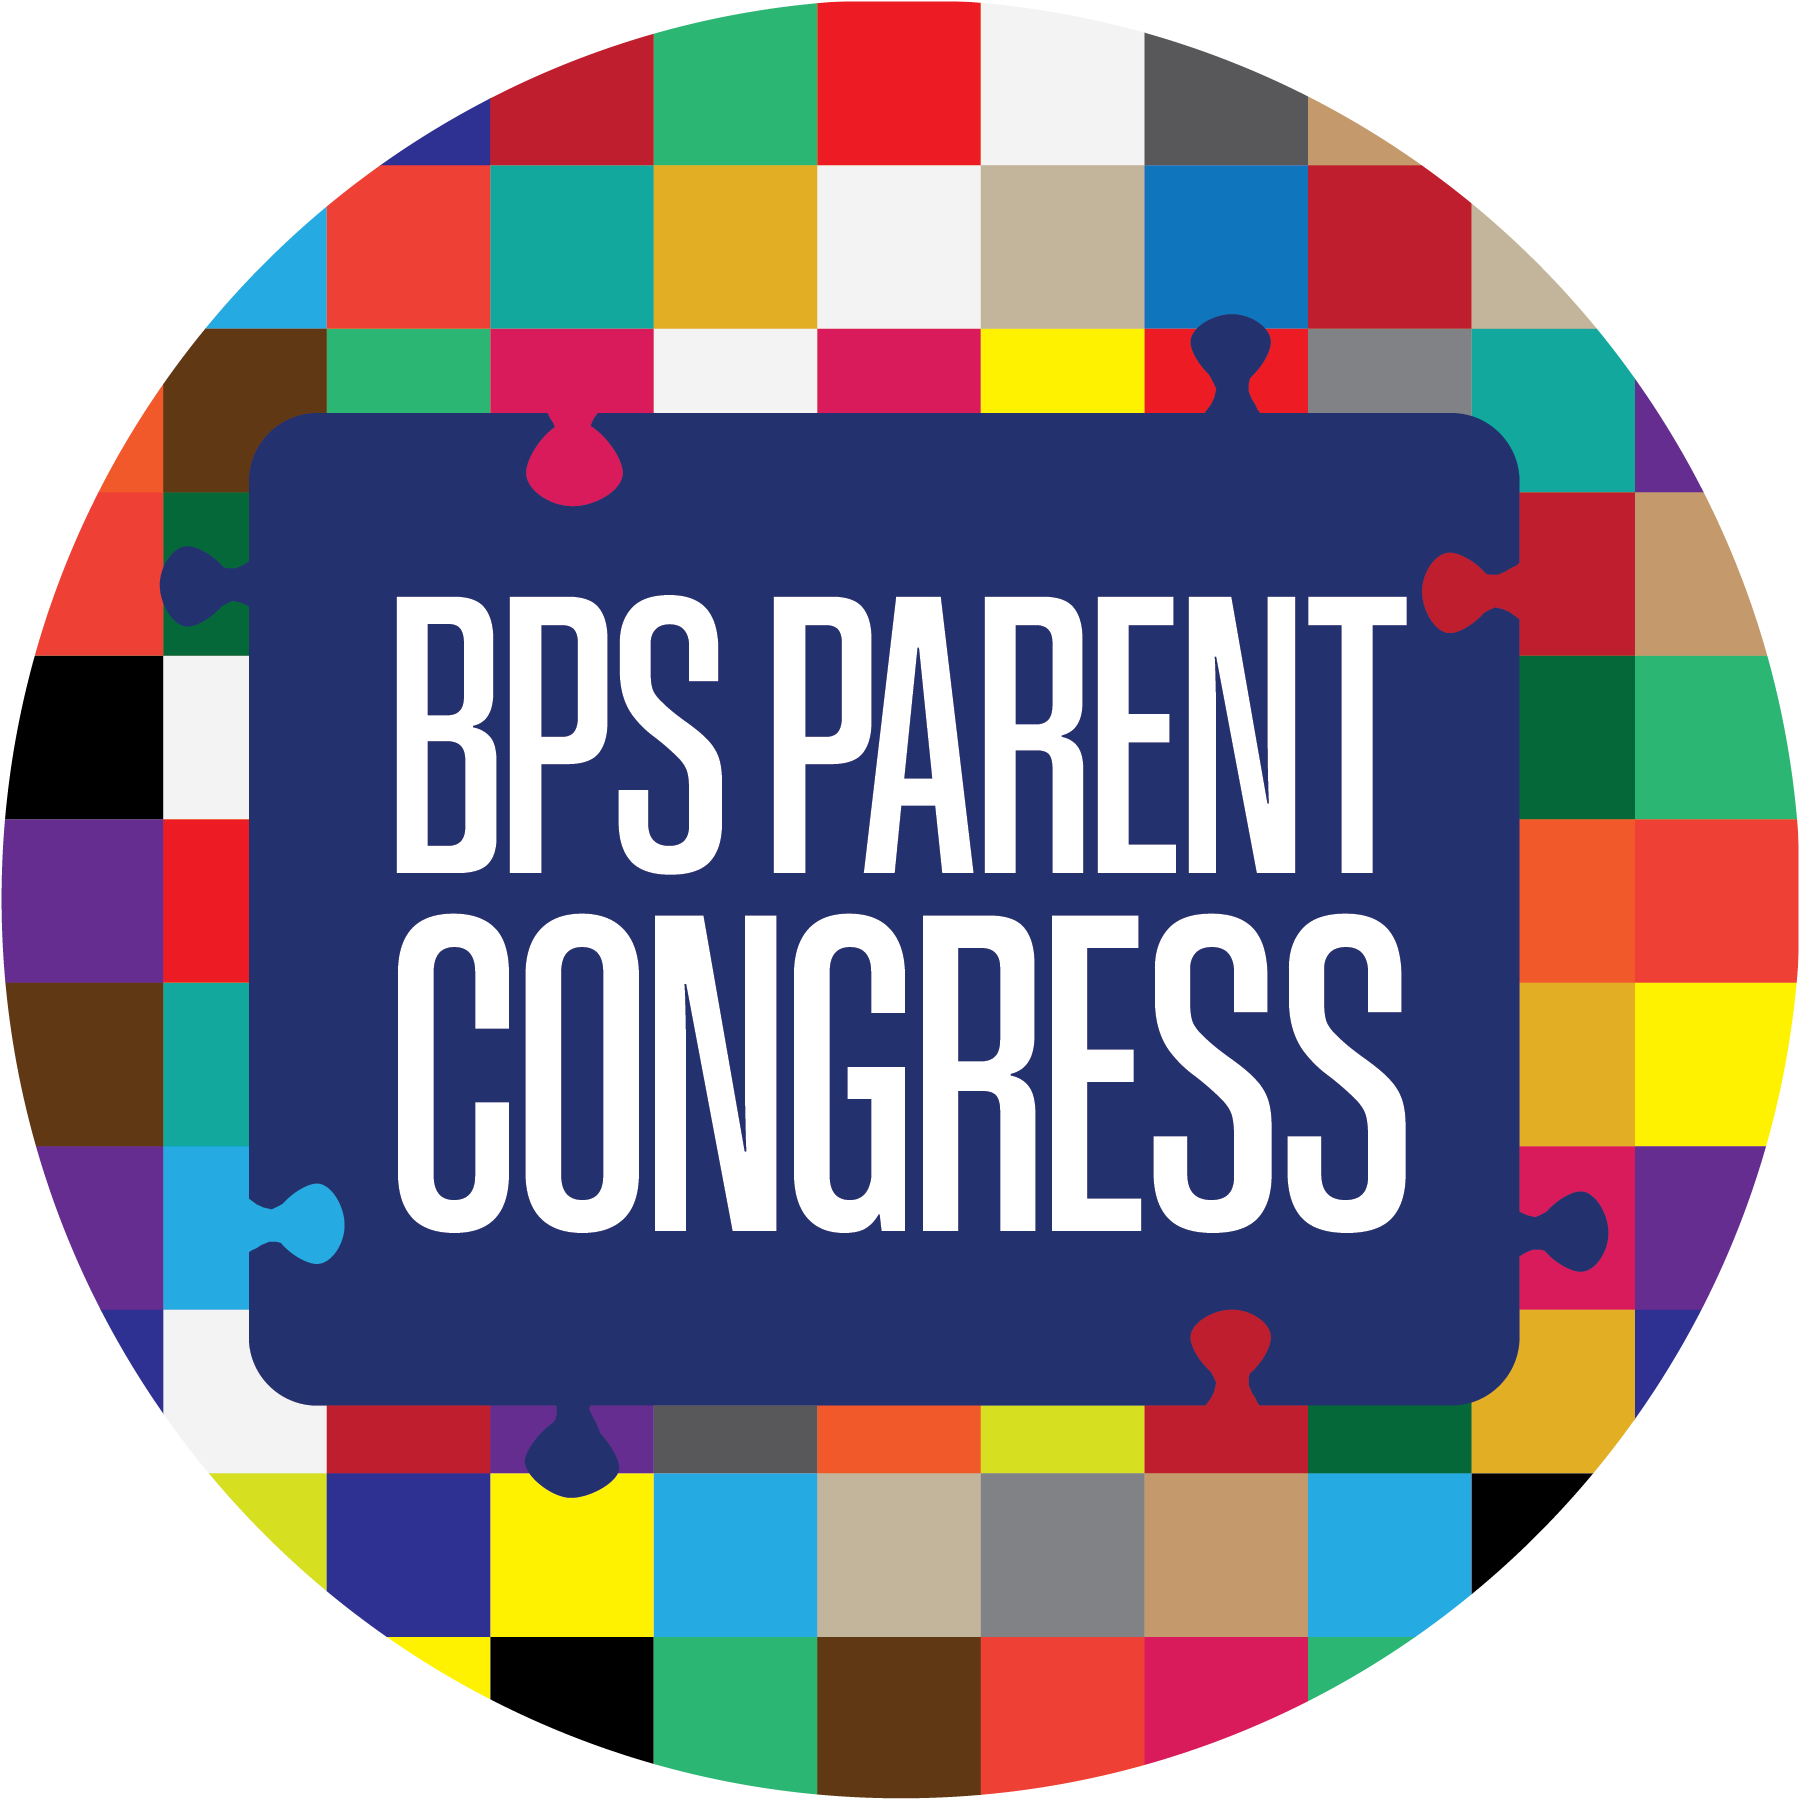 BPS Parent Congress Logo